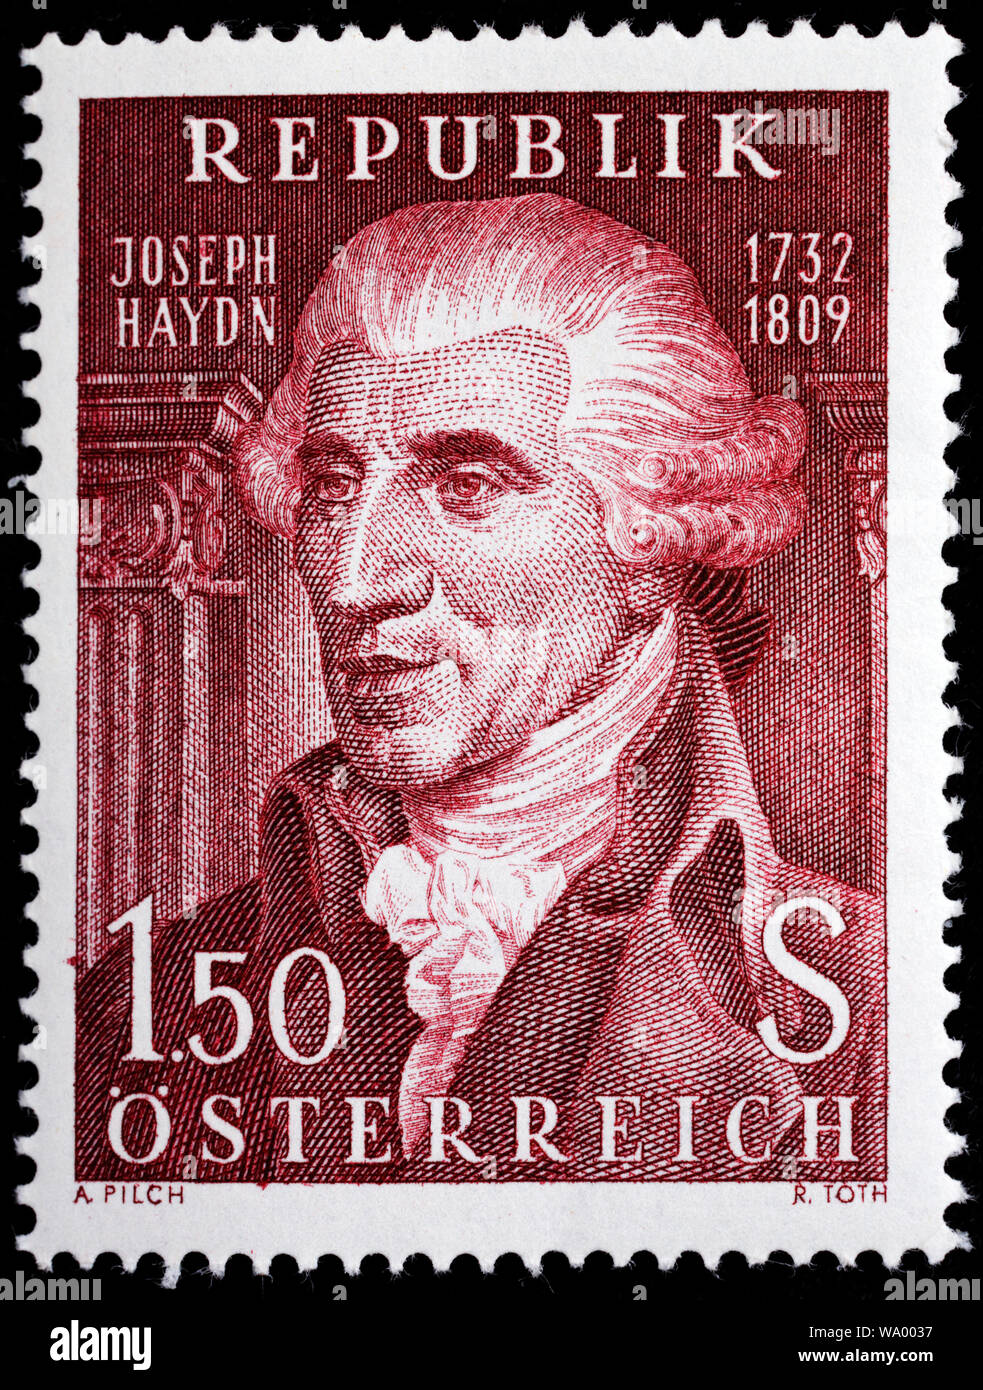 Joseph Haydn (1732-1809), composer, postage stamp, Austria, 1959 Stock Photo